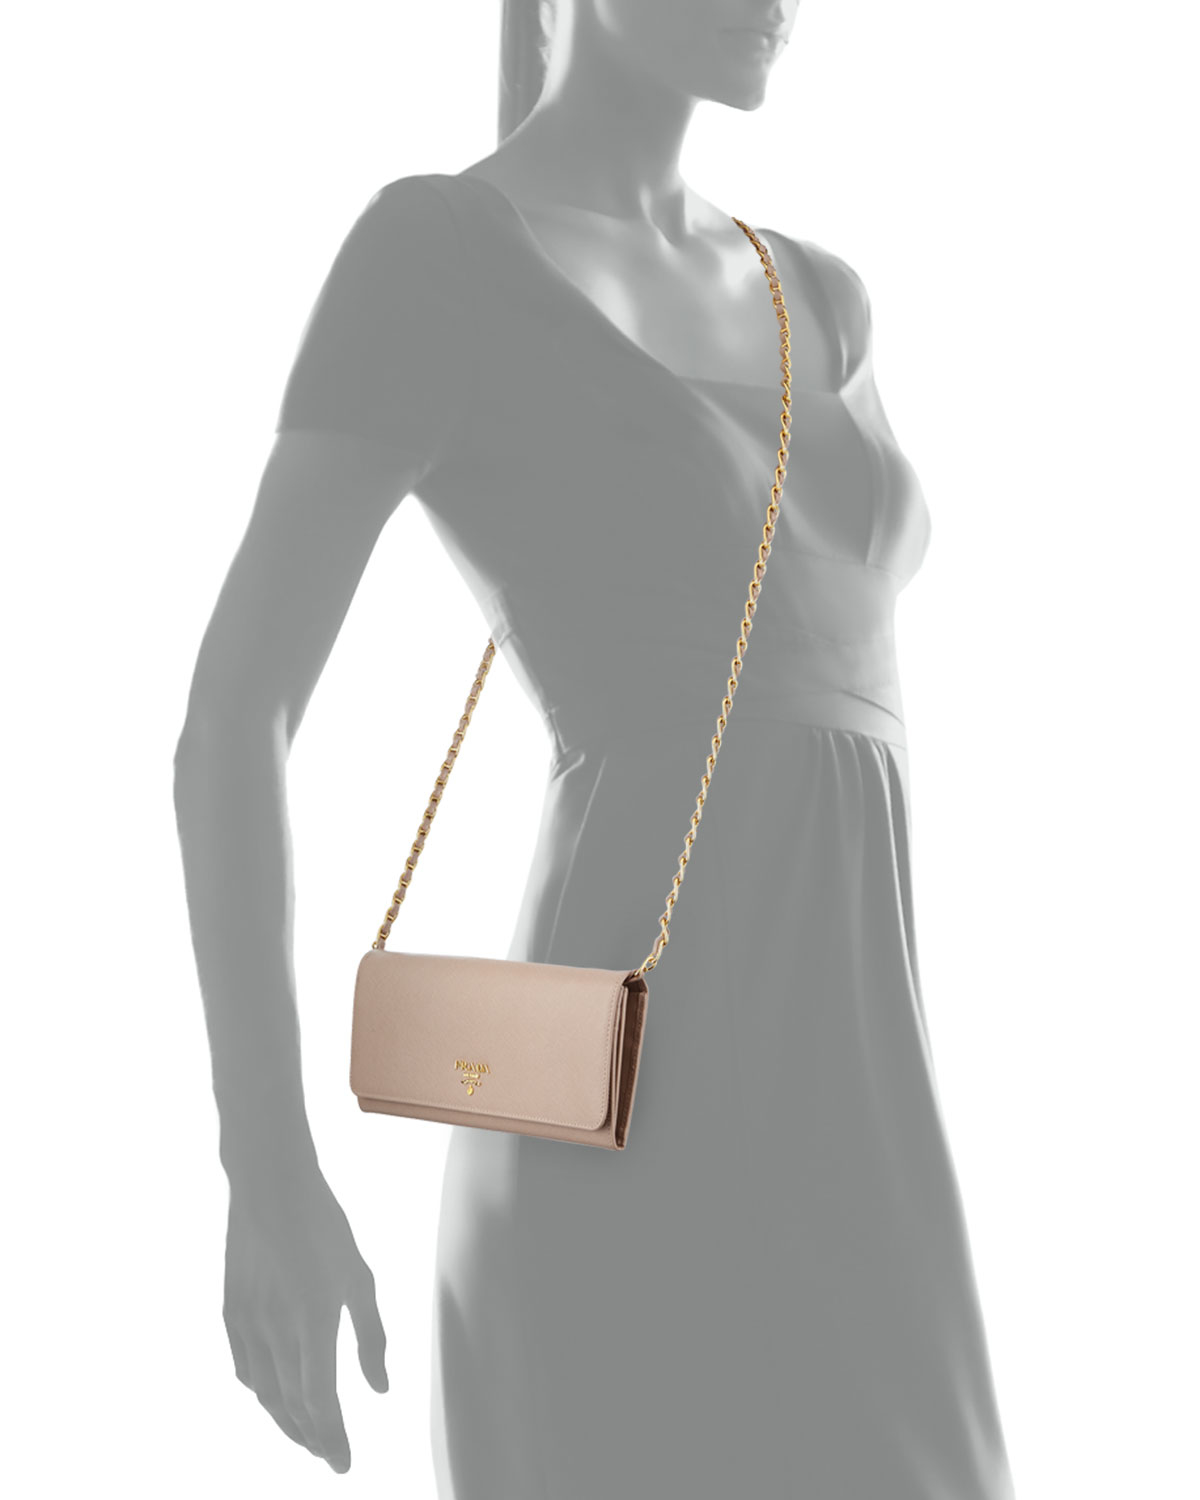 Prada Saffiano-Leather Wallet-On-Chain Bag in Beige | Lyst  